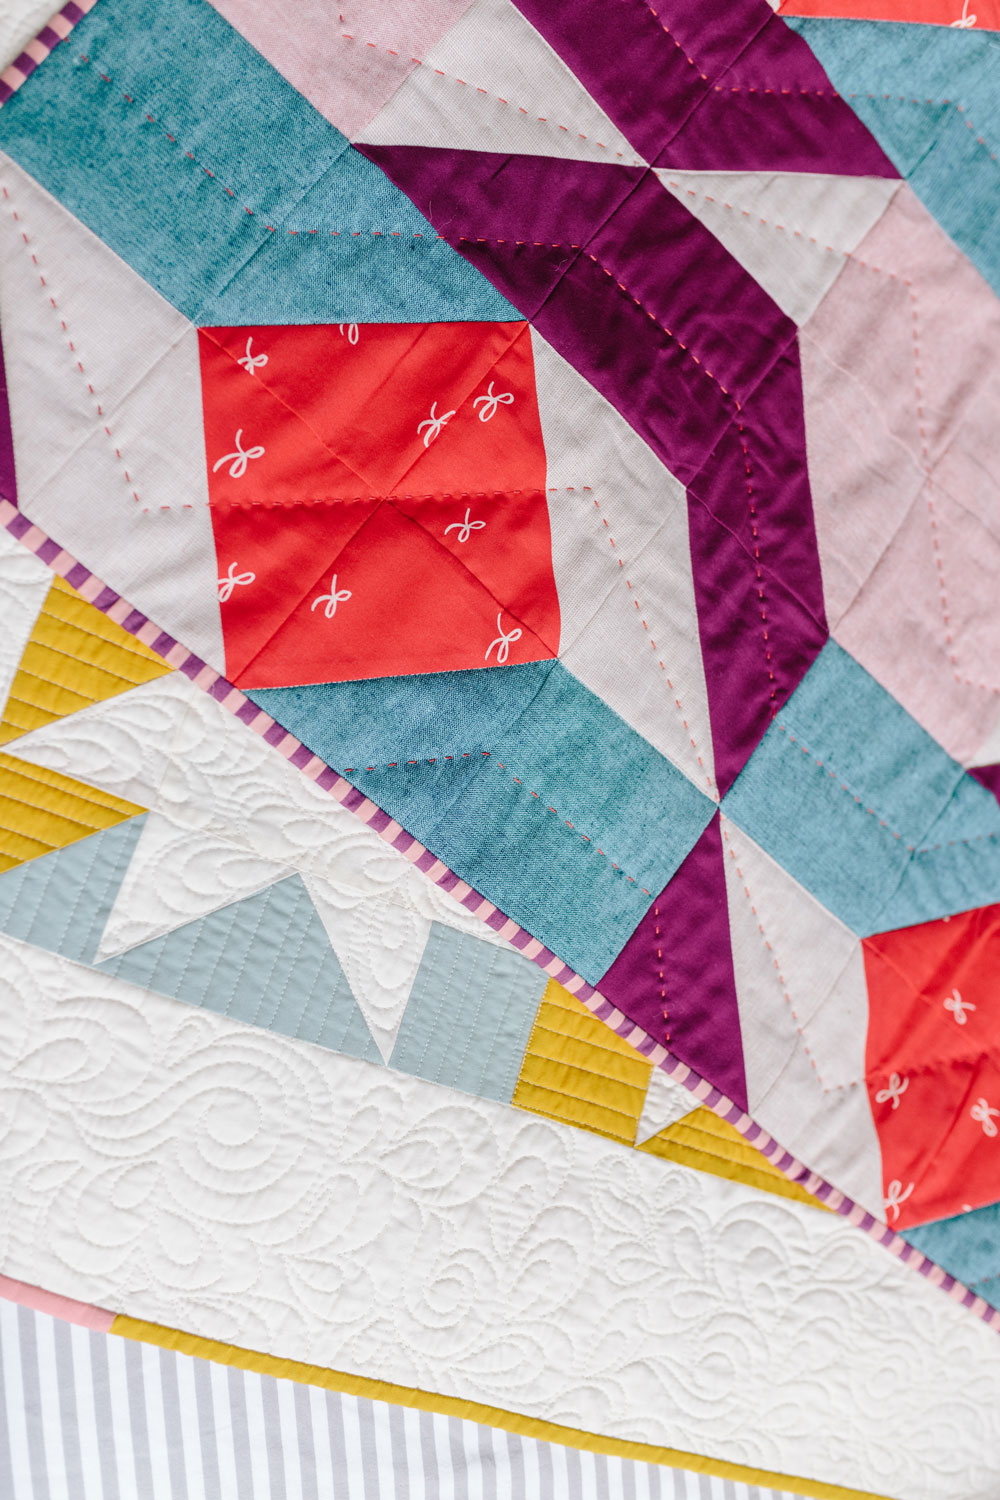 The Rocksteady Modern Quilt Pattern. | Suzy Quilts https://suzyquilts.com/rocksteady-quilt-pattern